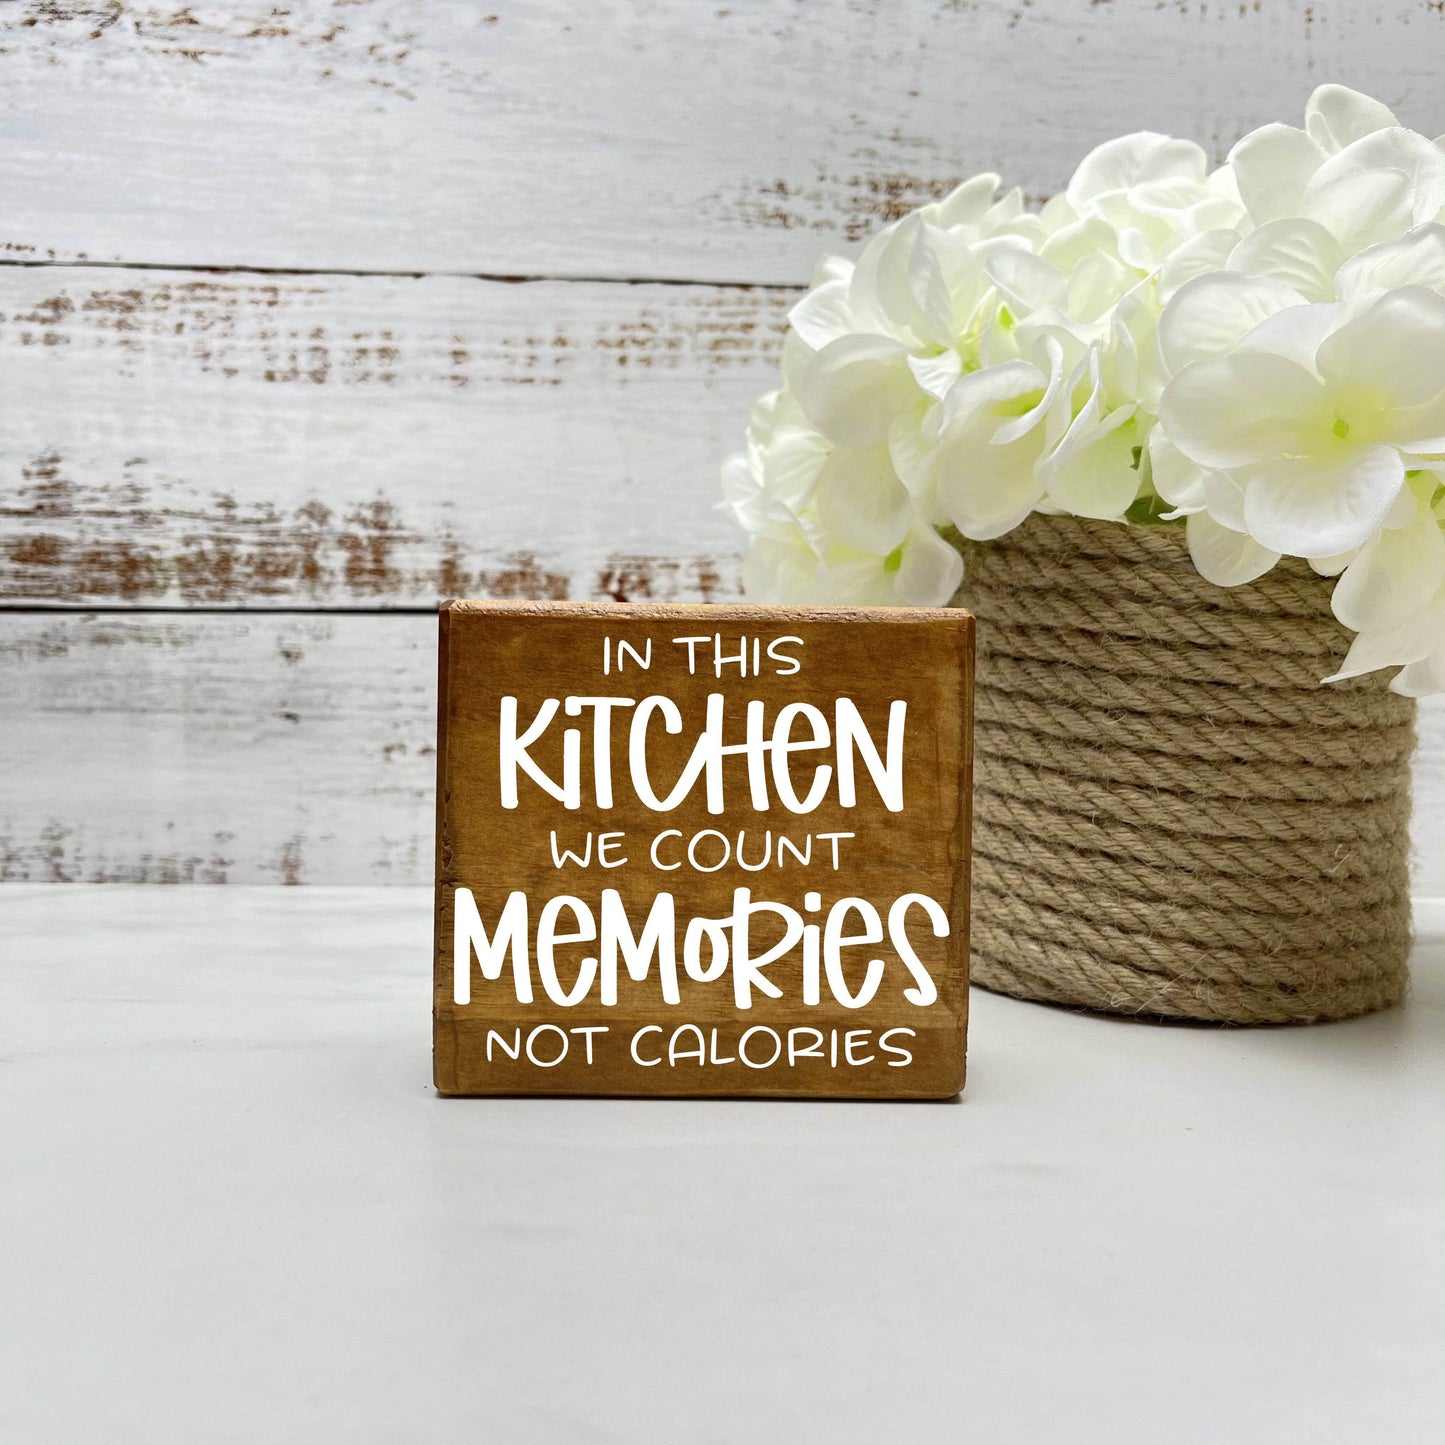 Count Memories not Calories, kitchen wood sign, kitchen decor, home decor